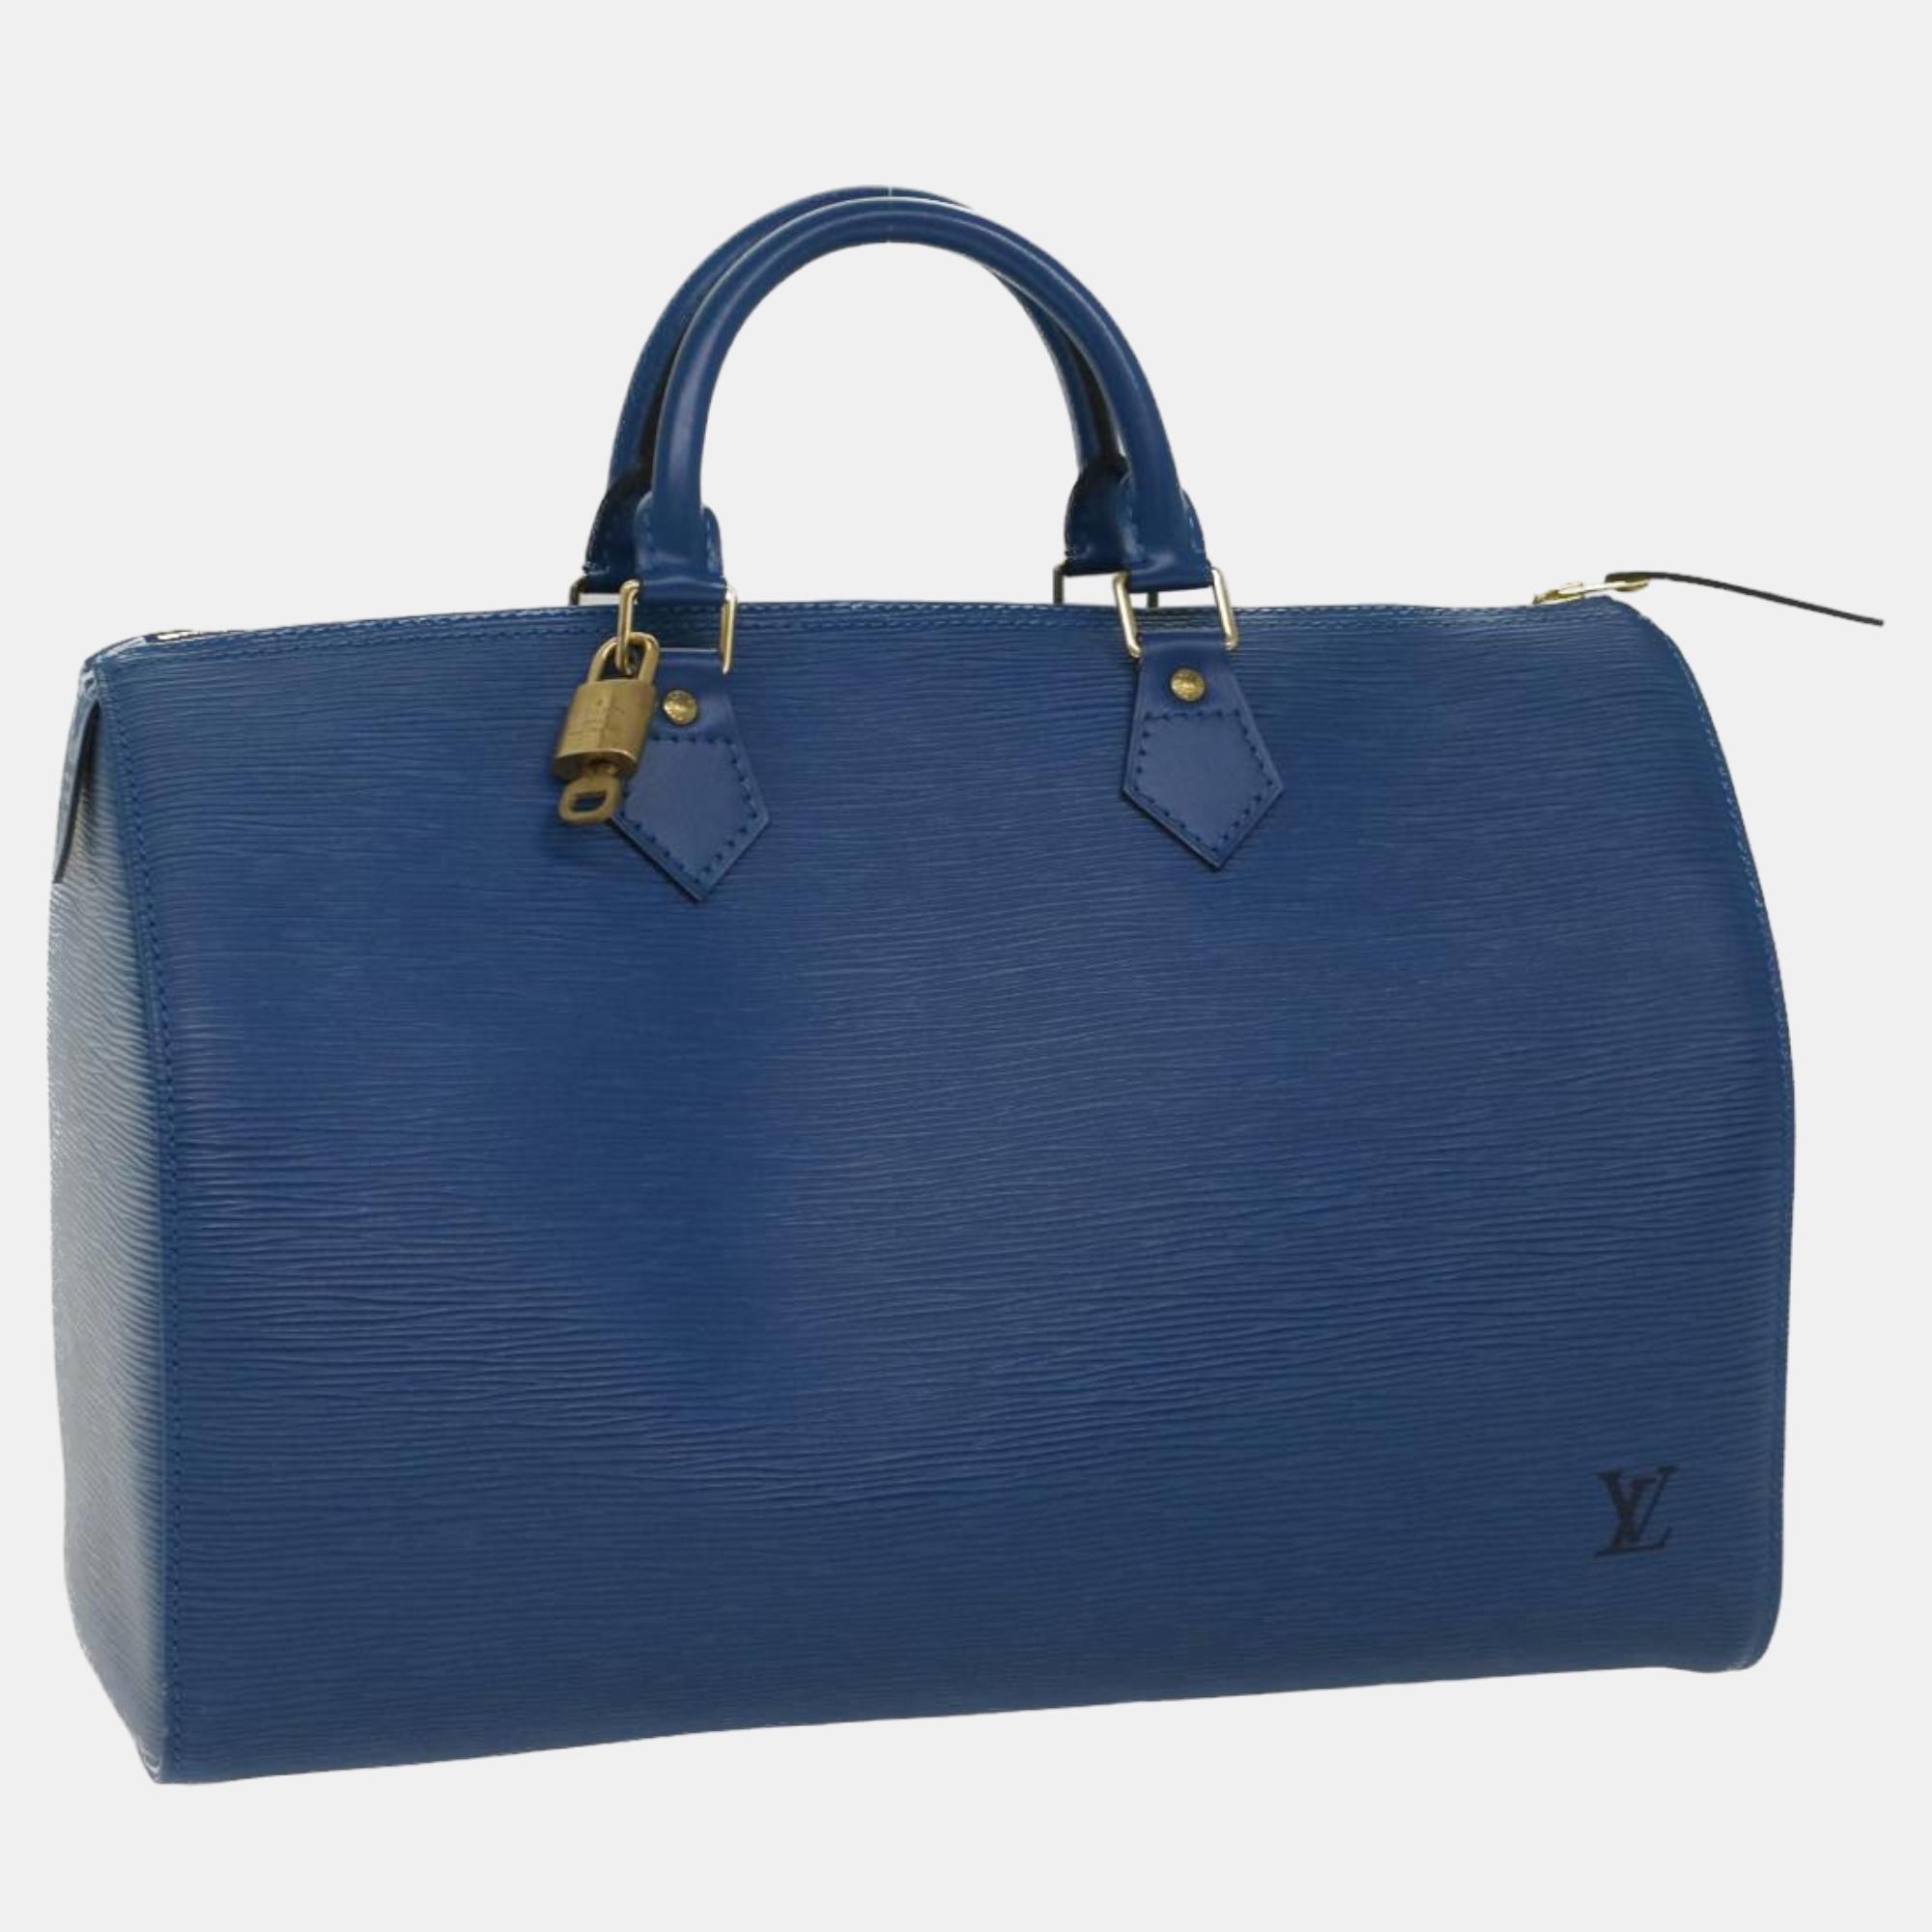 Pre-owned Louis Vuitton Blue Epi Leather Speedy 35 Duffel Bag